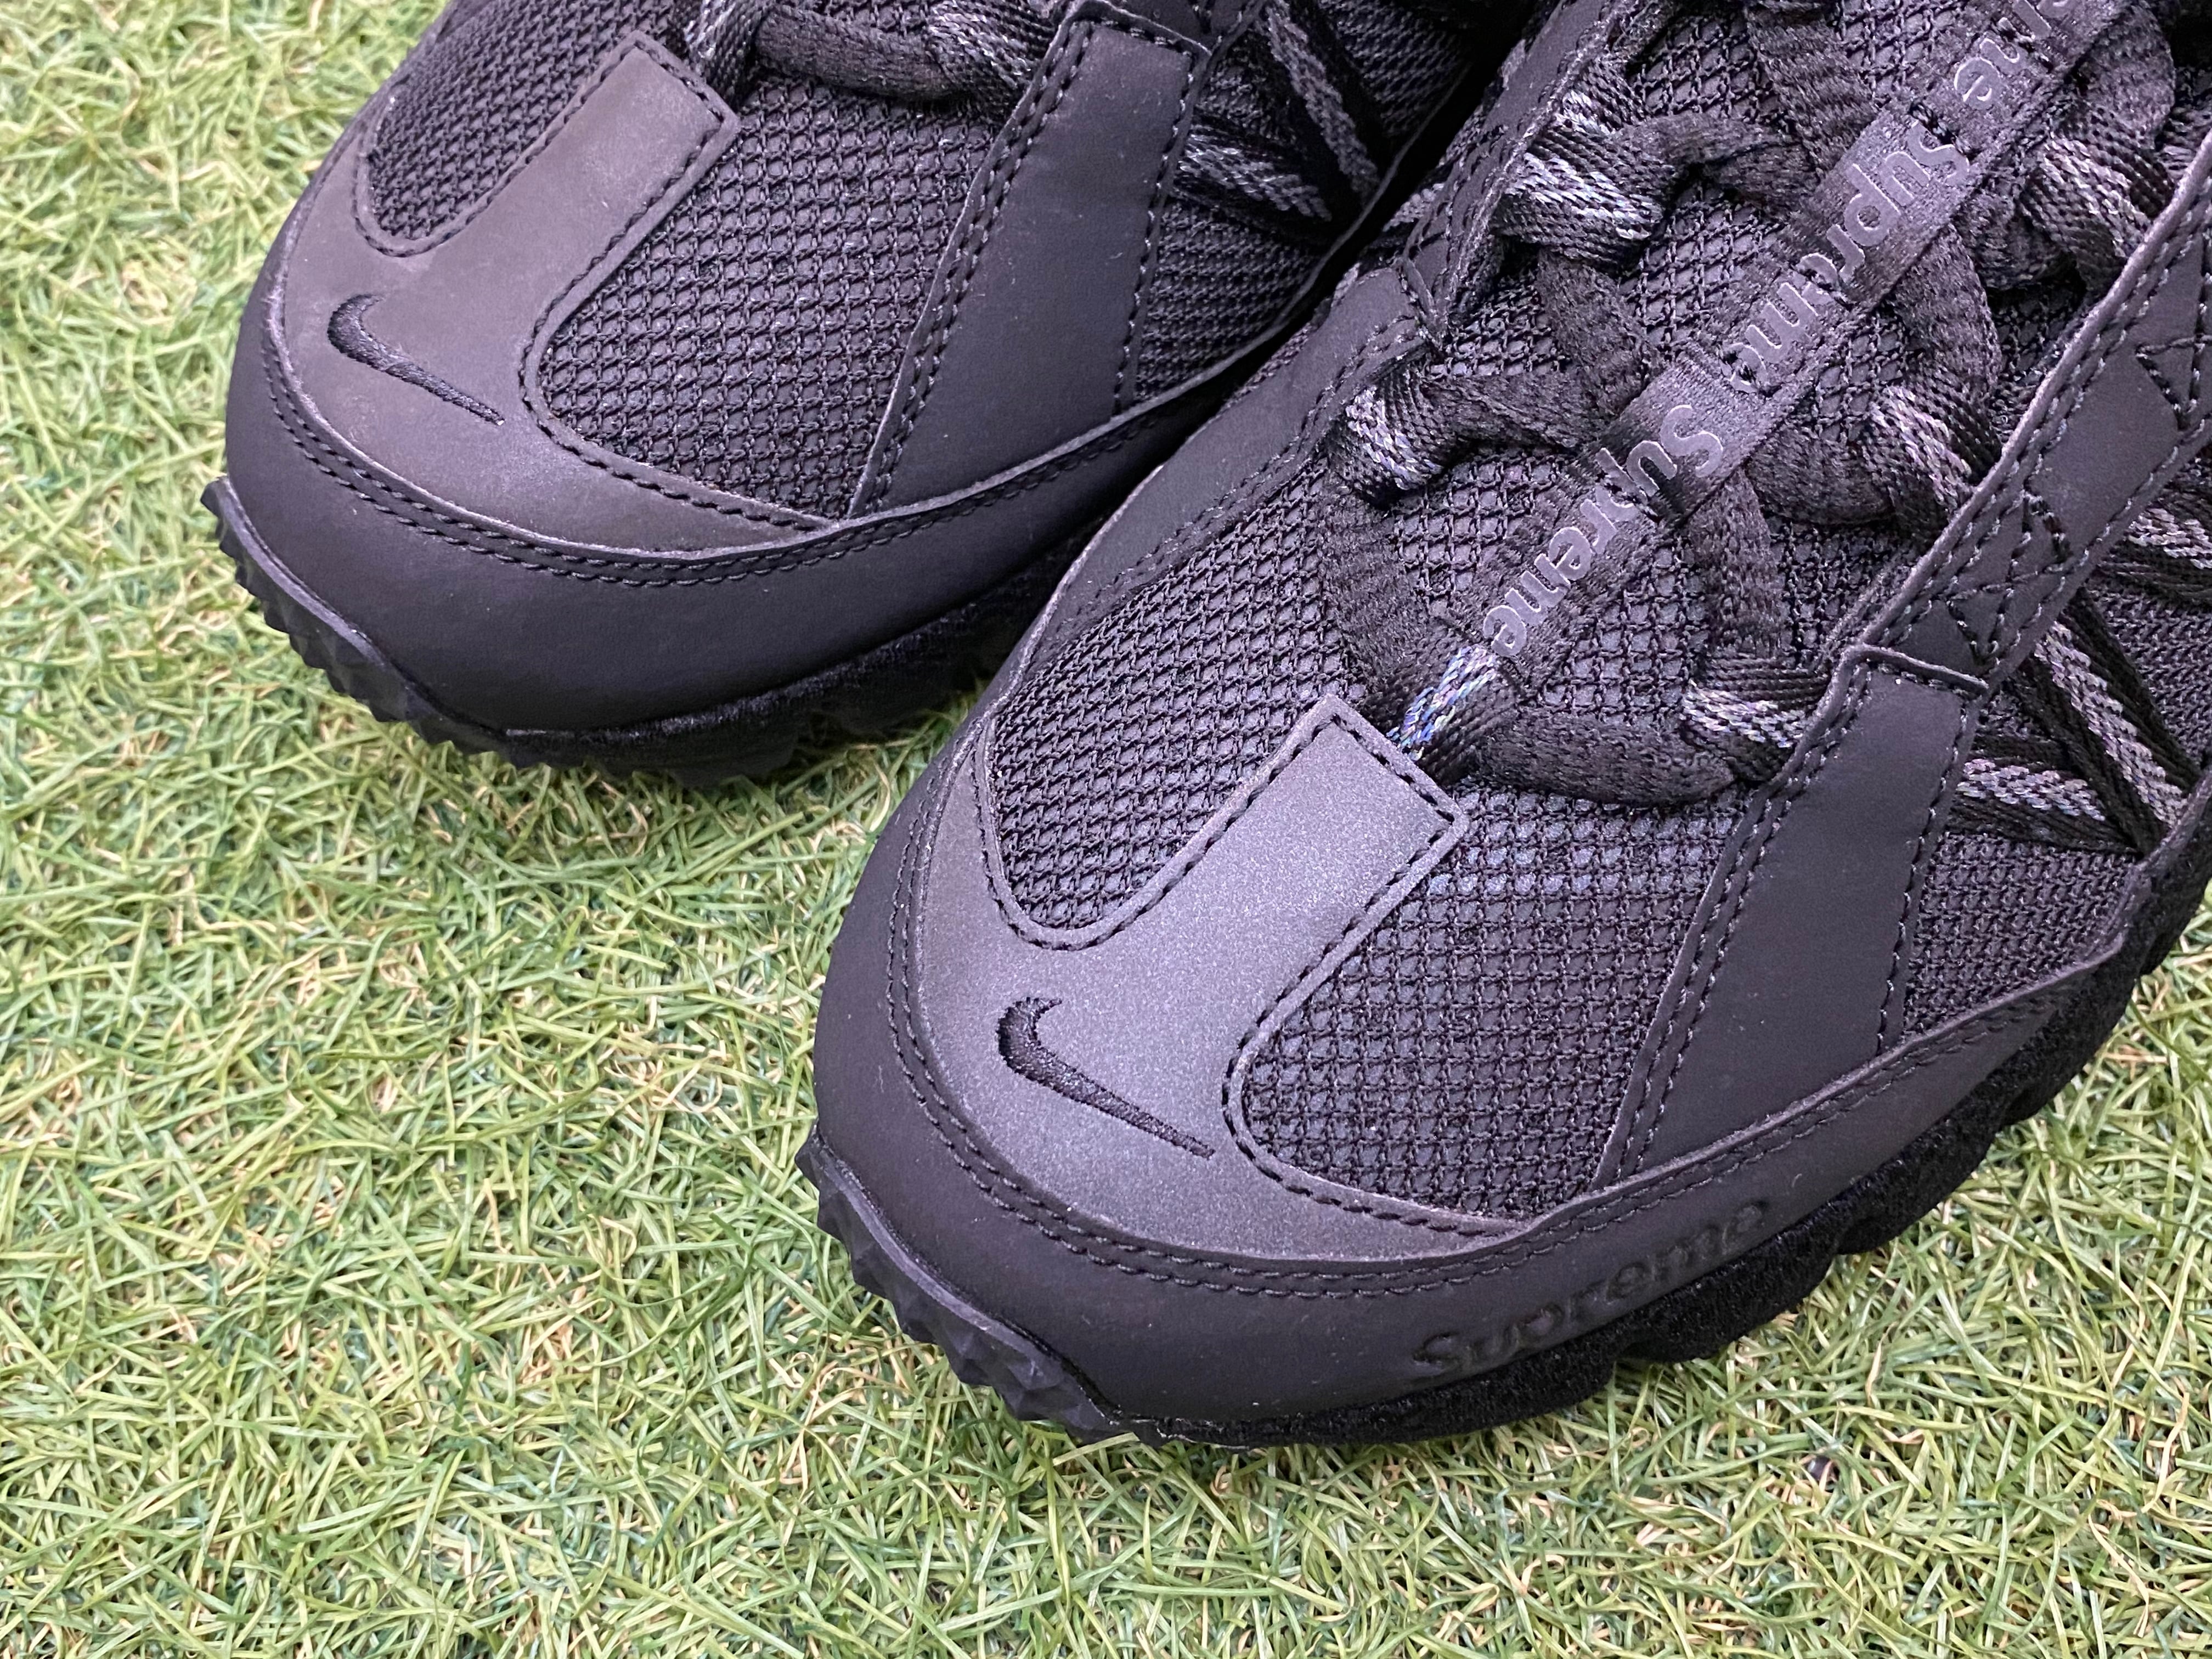 Supreme Nike Air Humara black 黒 28cm 新品